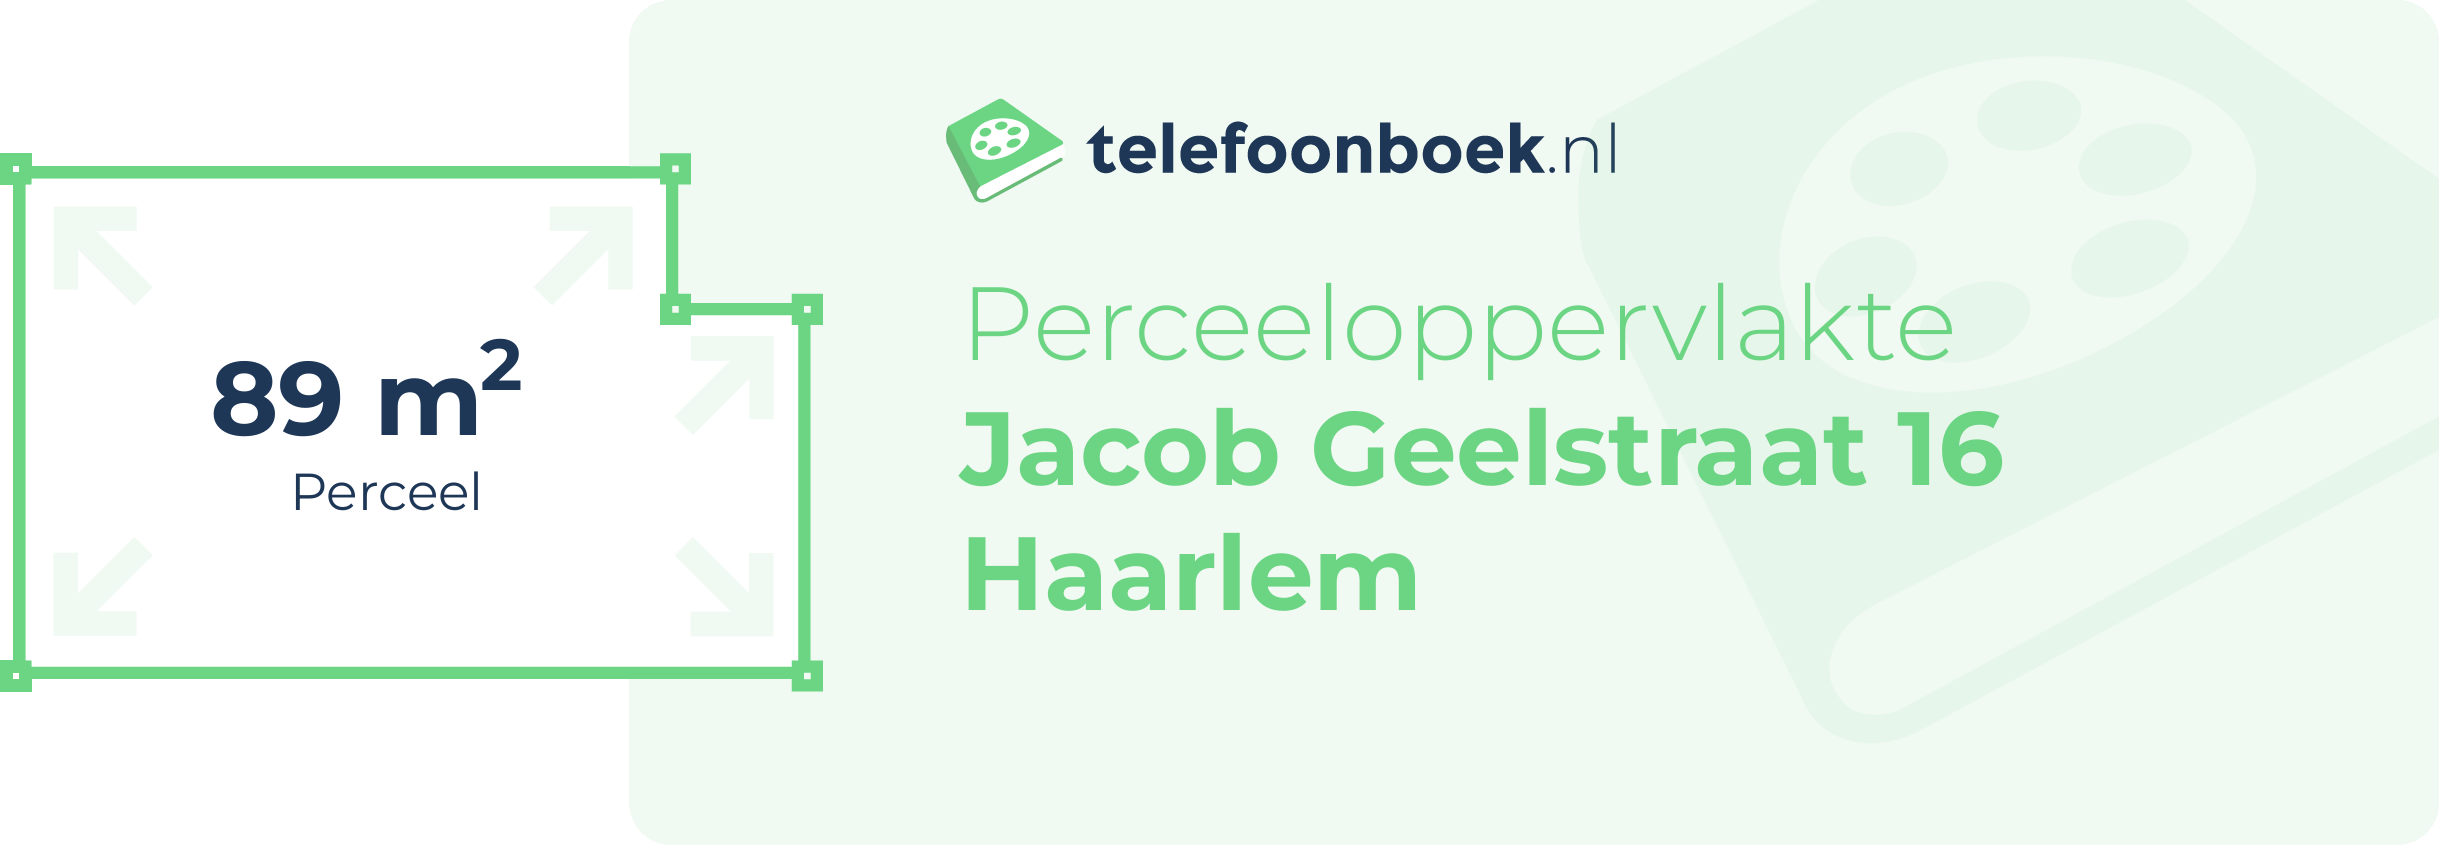 Perceeloppervlakte Jacob Geelstraat 16 Haarlem